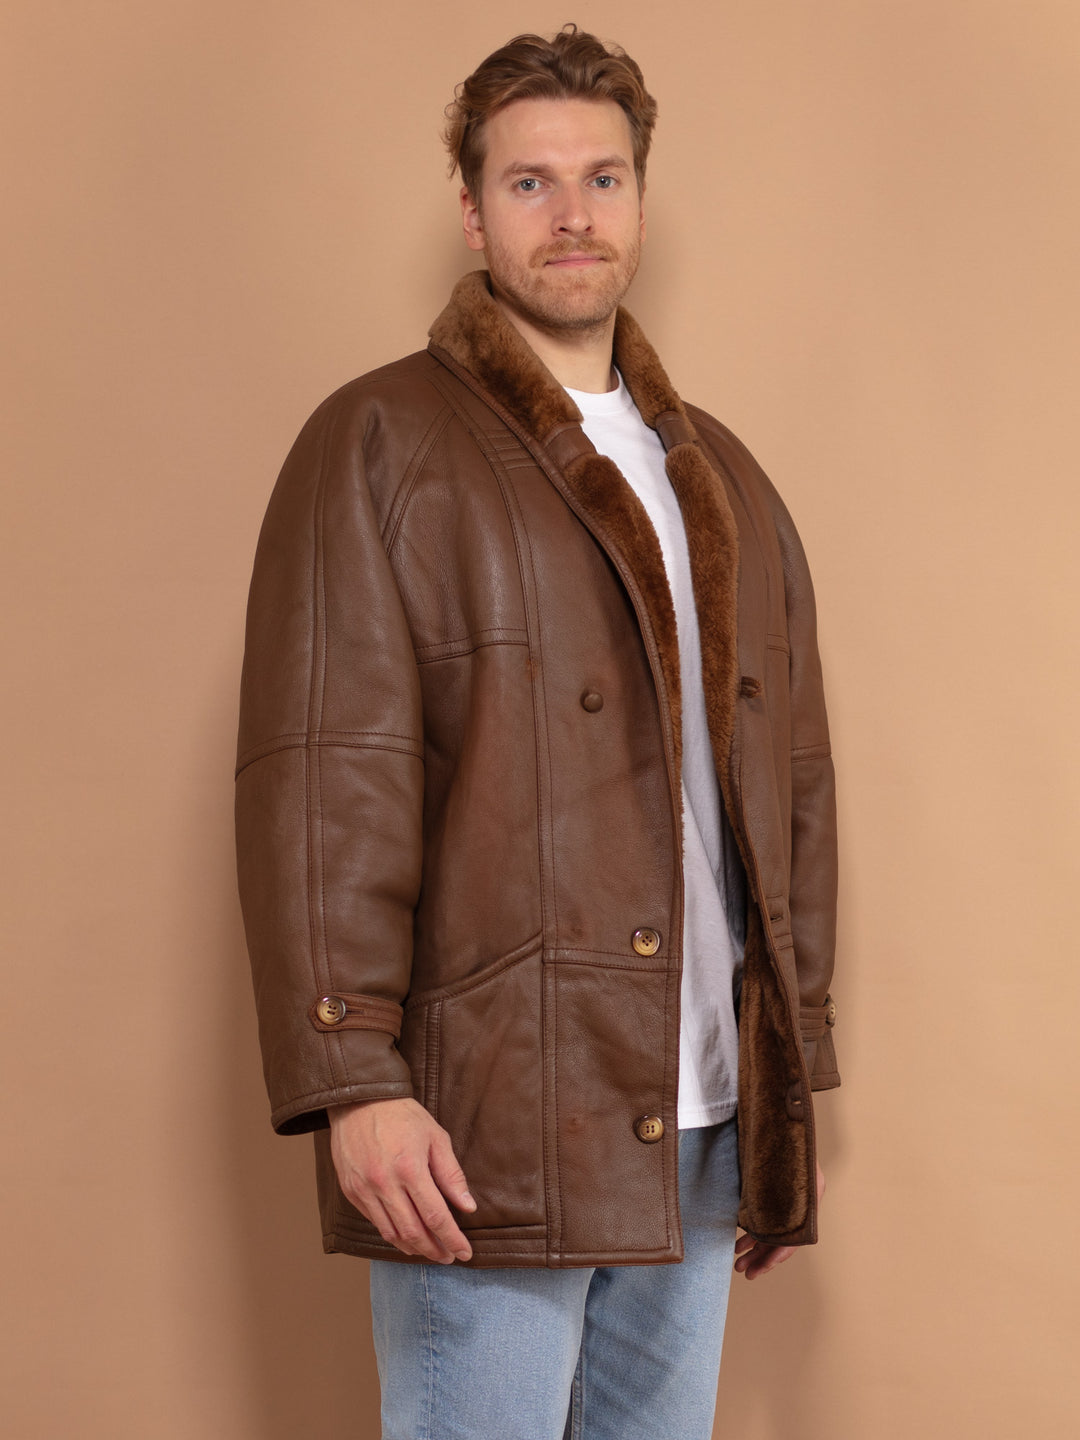 Brown Sheepskin Coat 70s, Size Large, Sheepskin Leather Coat, Button Up Winter Coat, Retro Outerwear, Vintage Fashion, Western Jacket